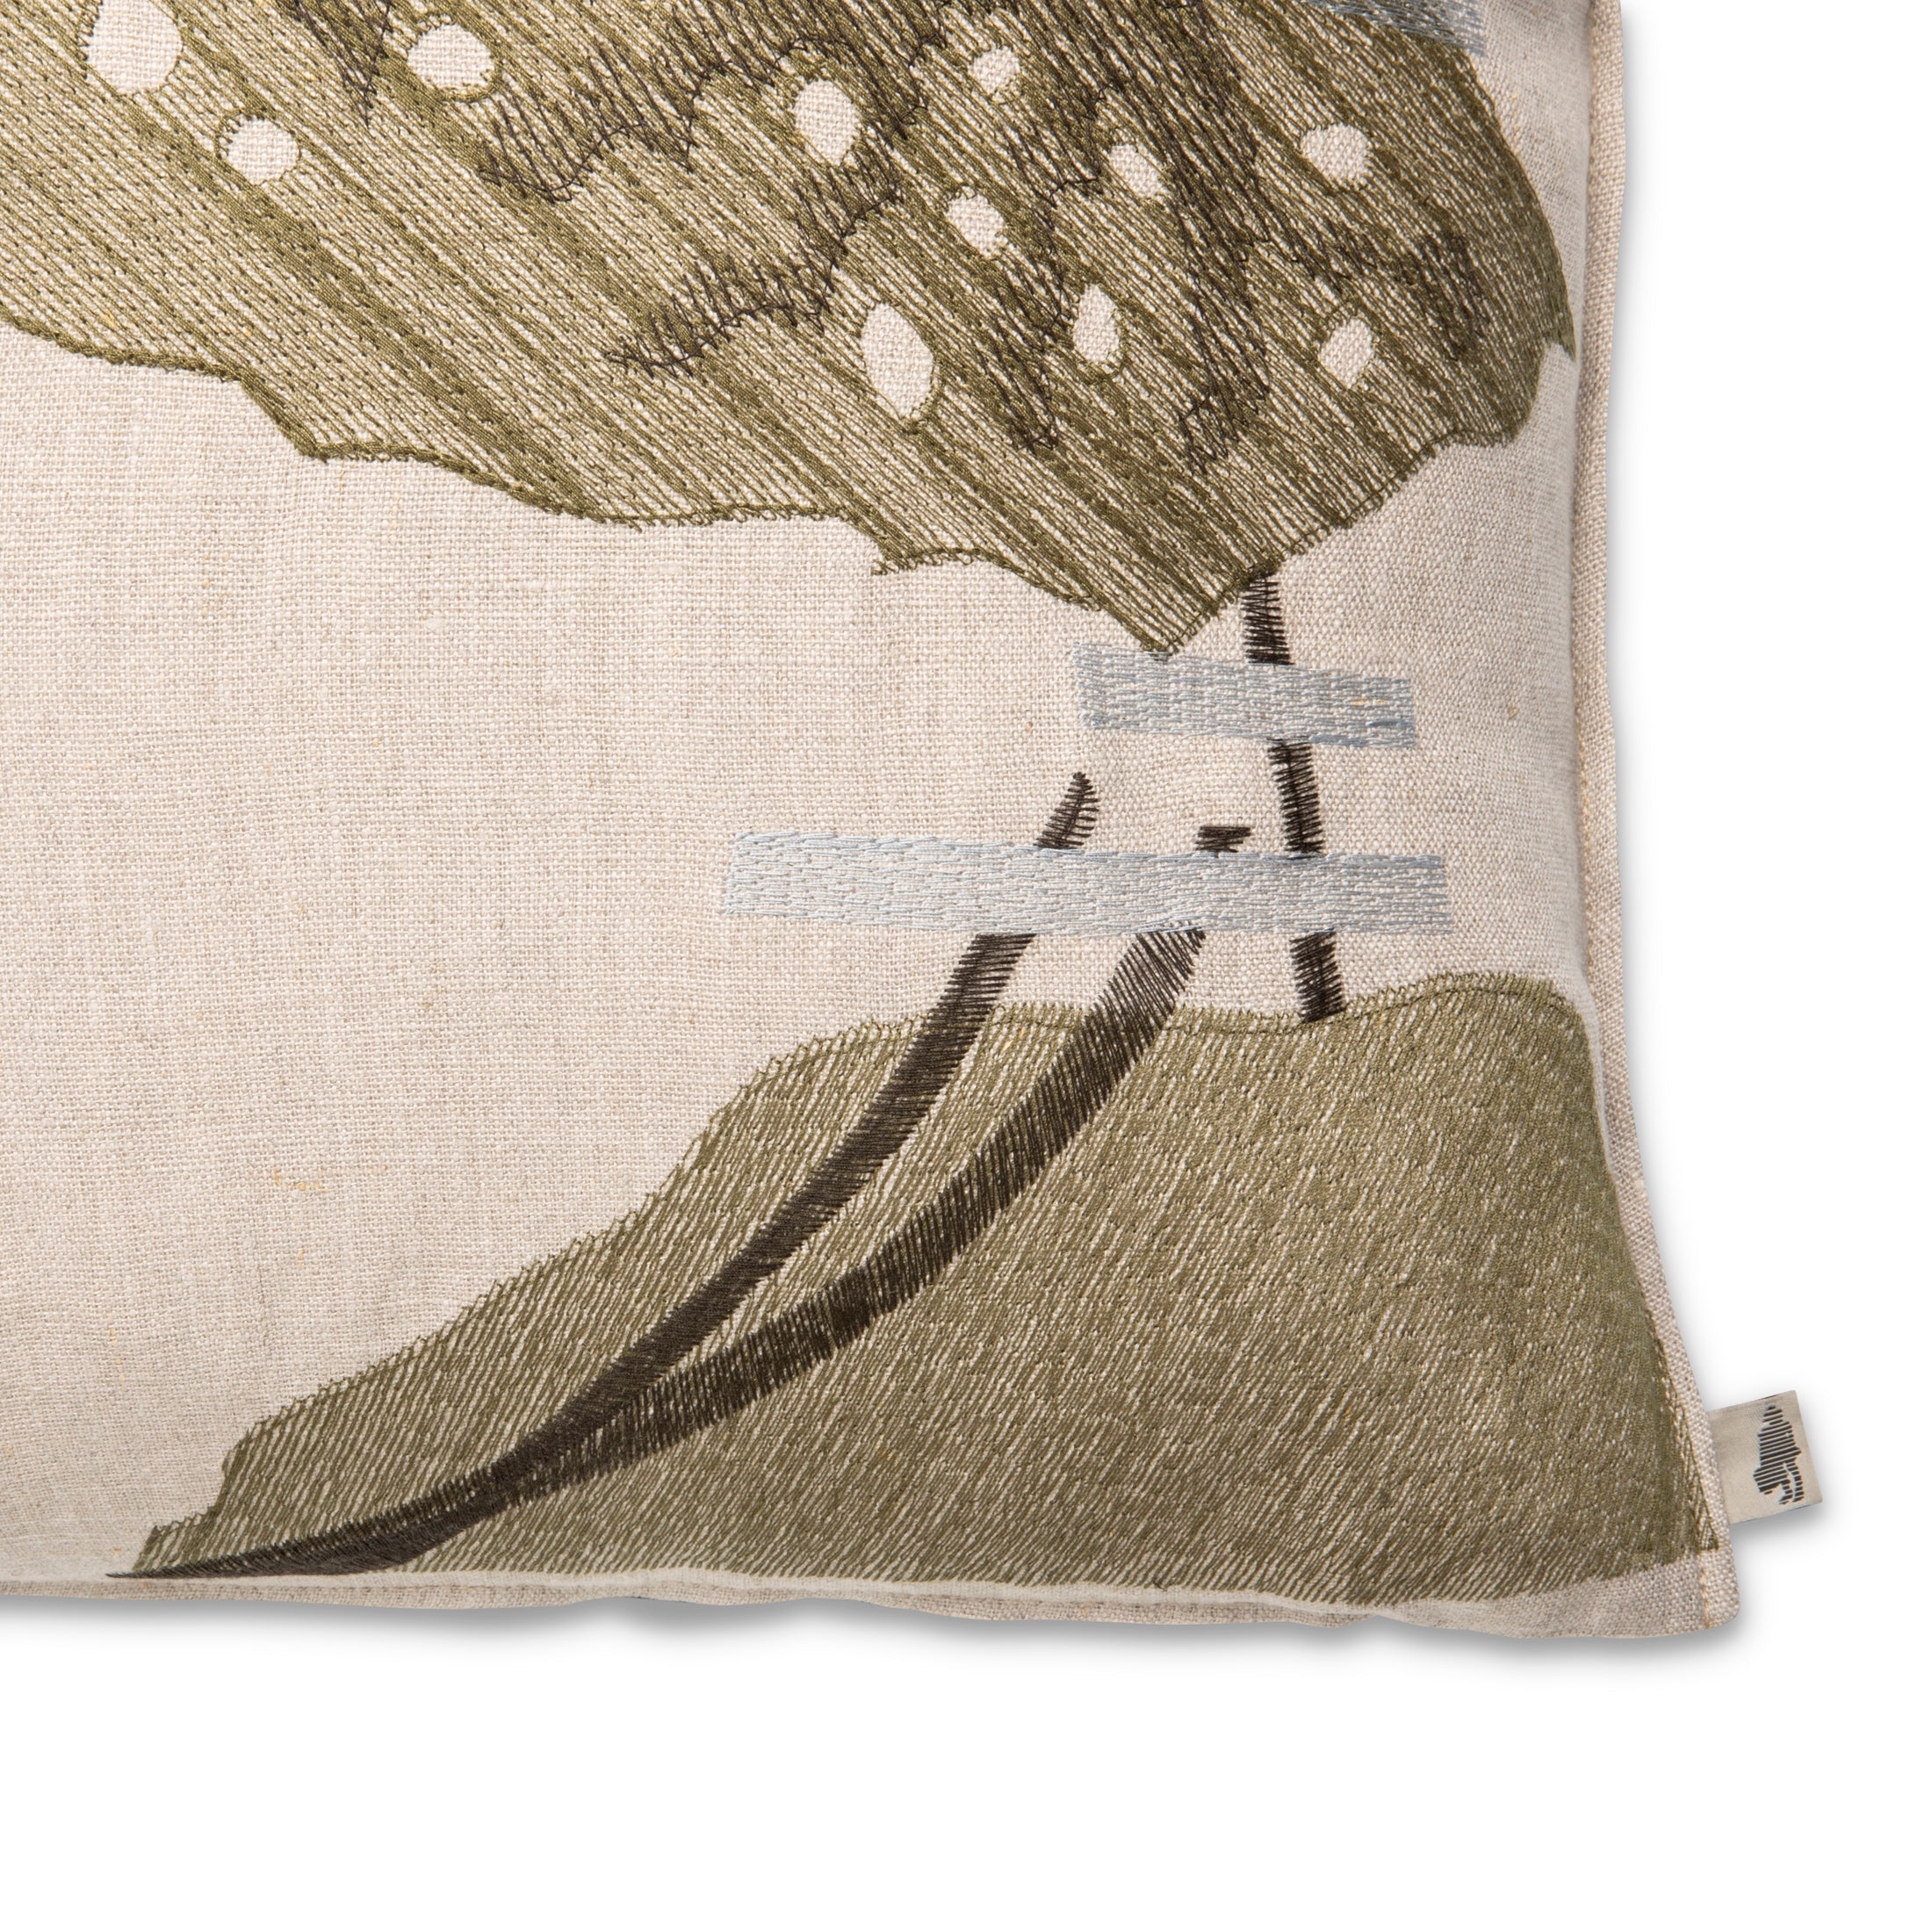 Gobegu Embroidered Pillow